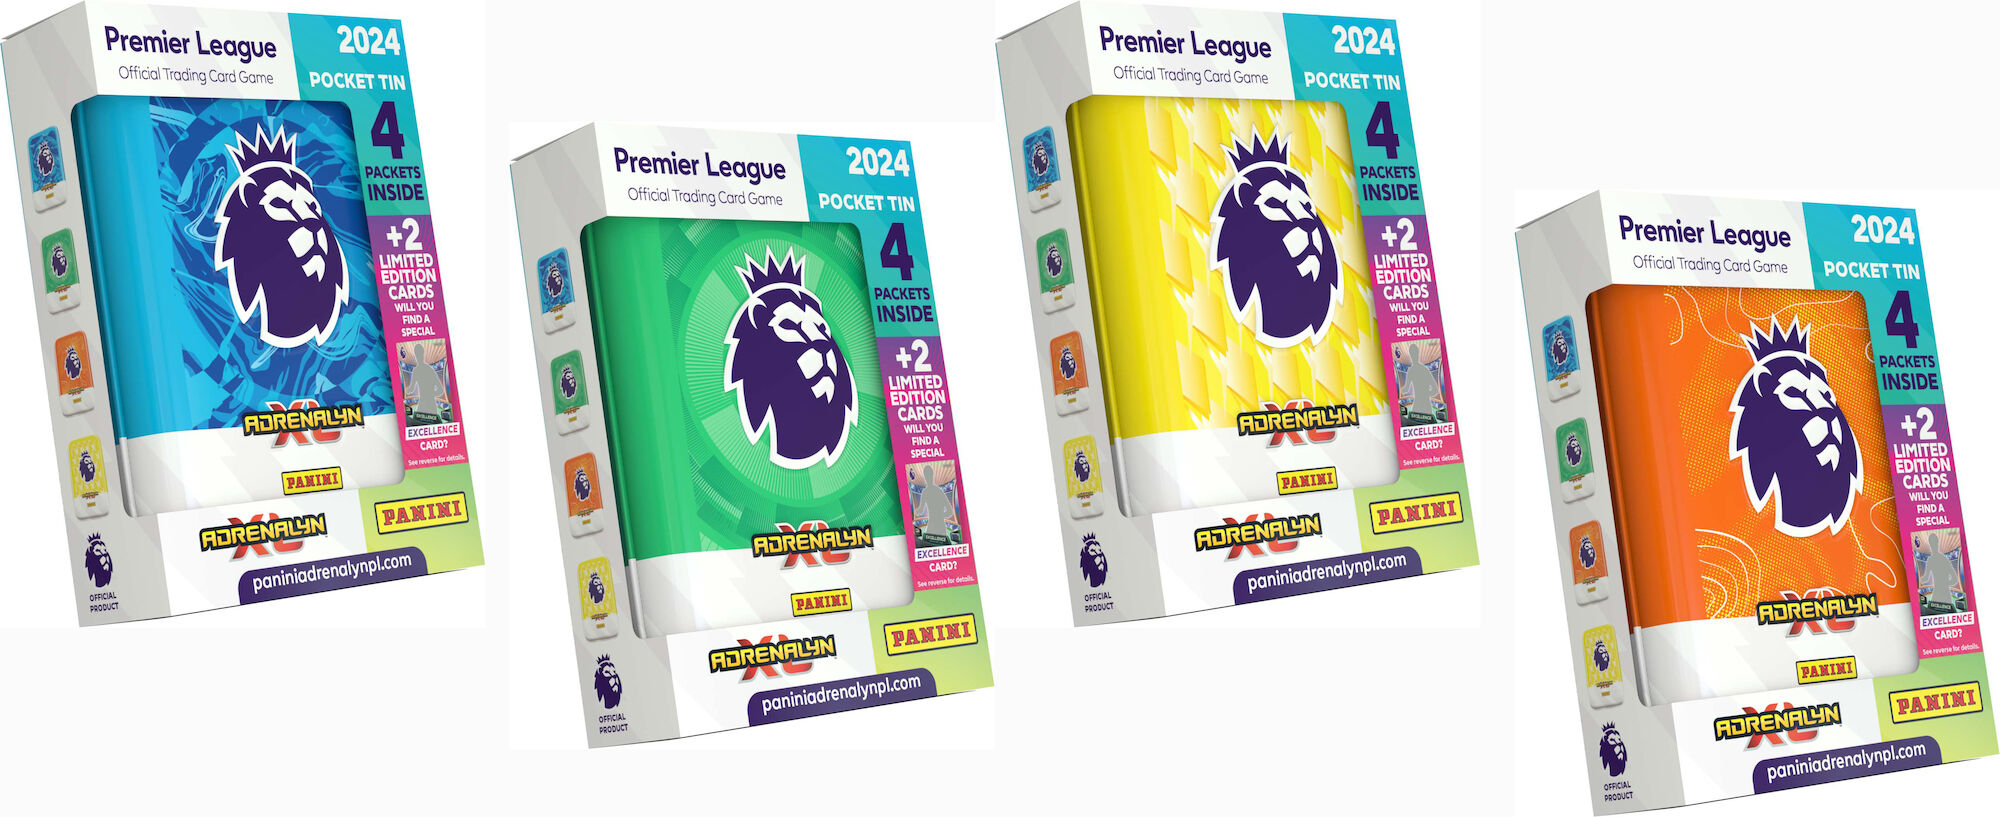 Premier League 23/24 Pocket Samlarkort Blandad